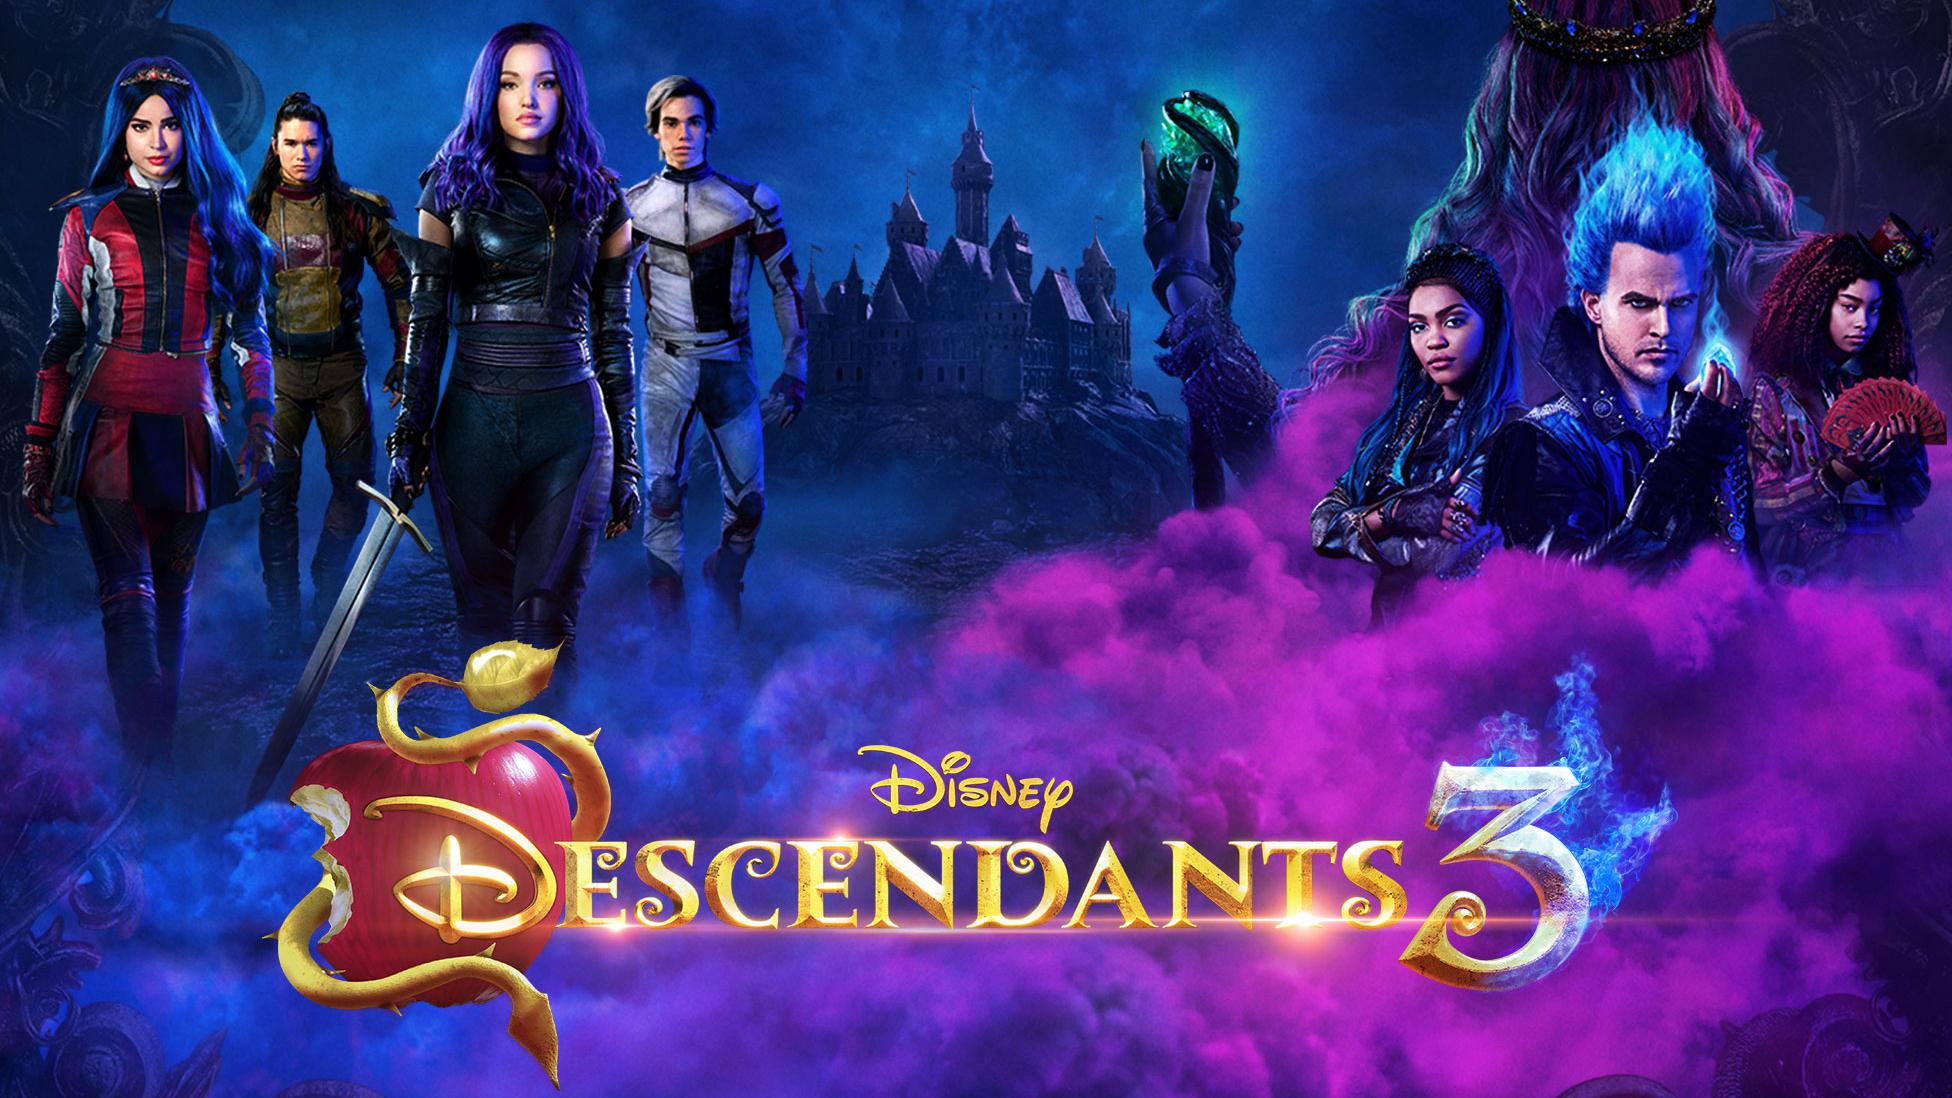 Stream And Watch Descendants 3: Pop Up Version Online